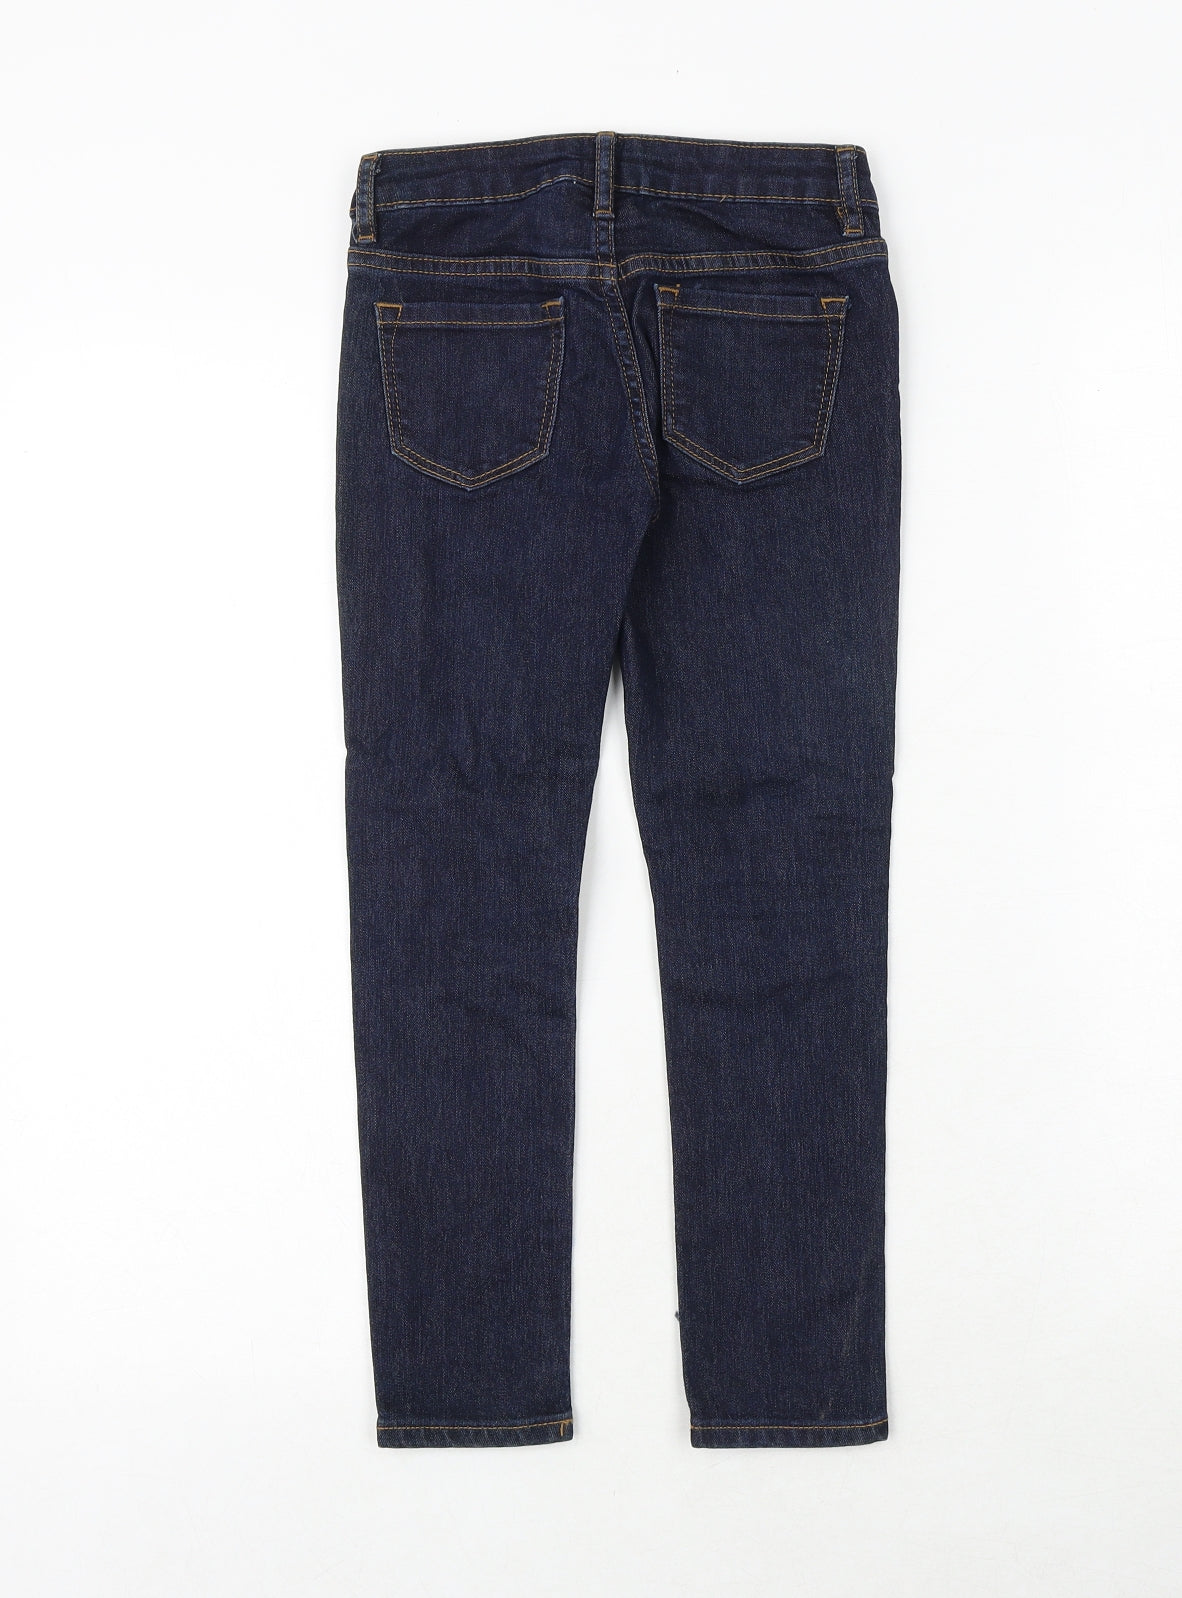 Gap Girls Blue Cotton Skinny Jeans Size 6 Years Regular Zip